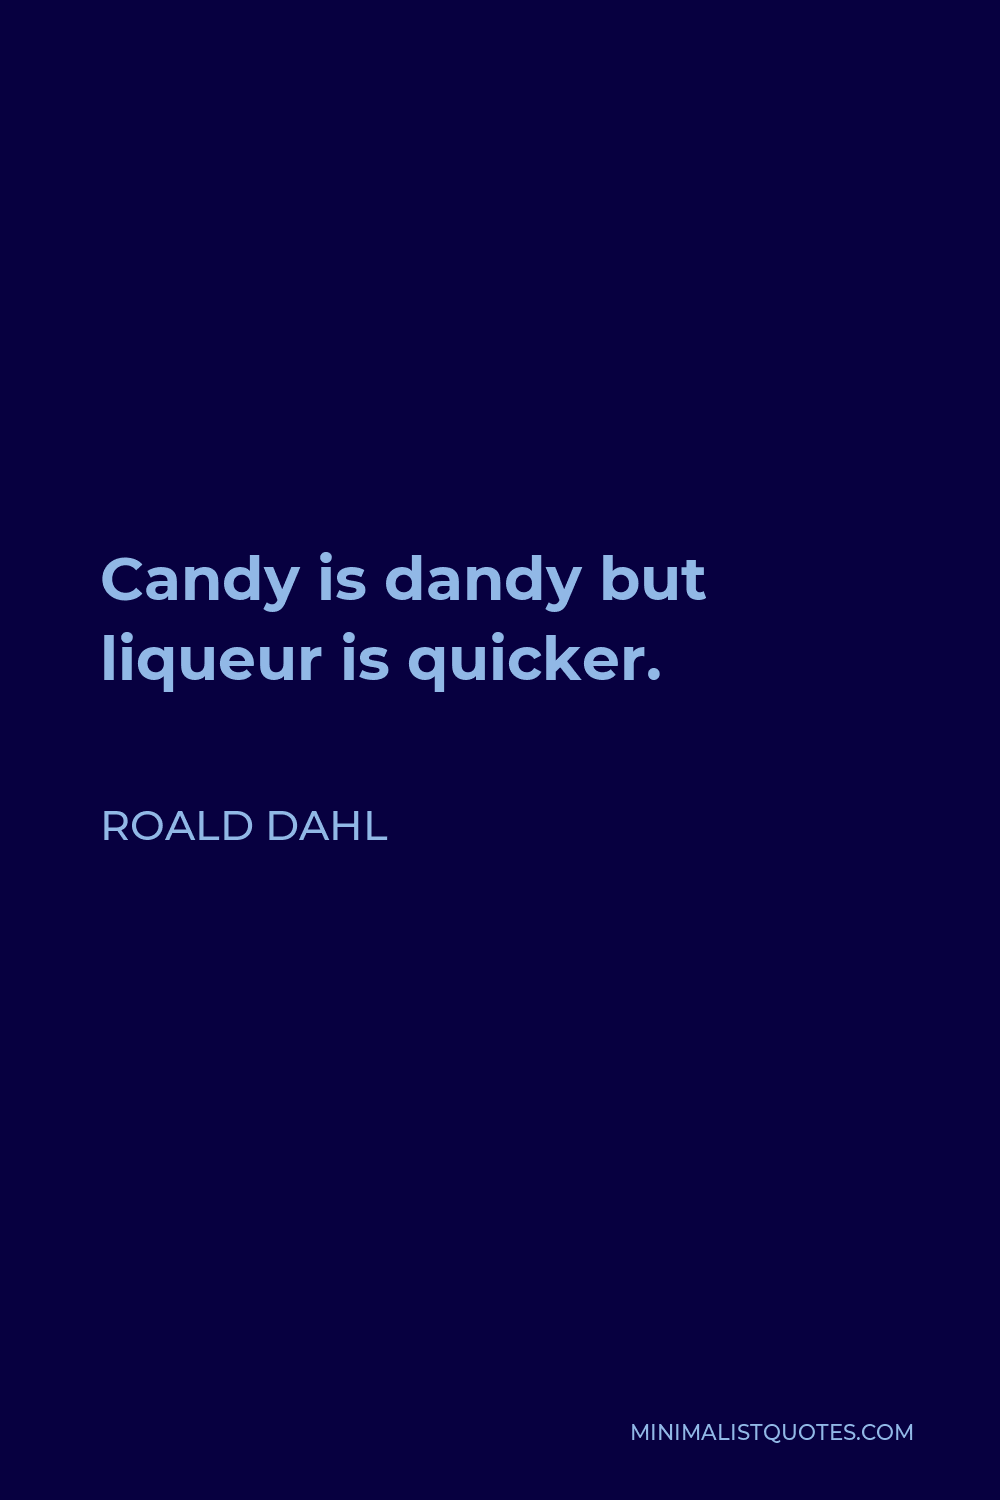 Roald Dahl Quote - Candy is dandy but liqueur is quicker.